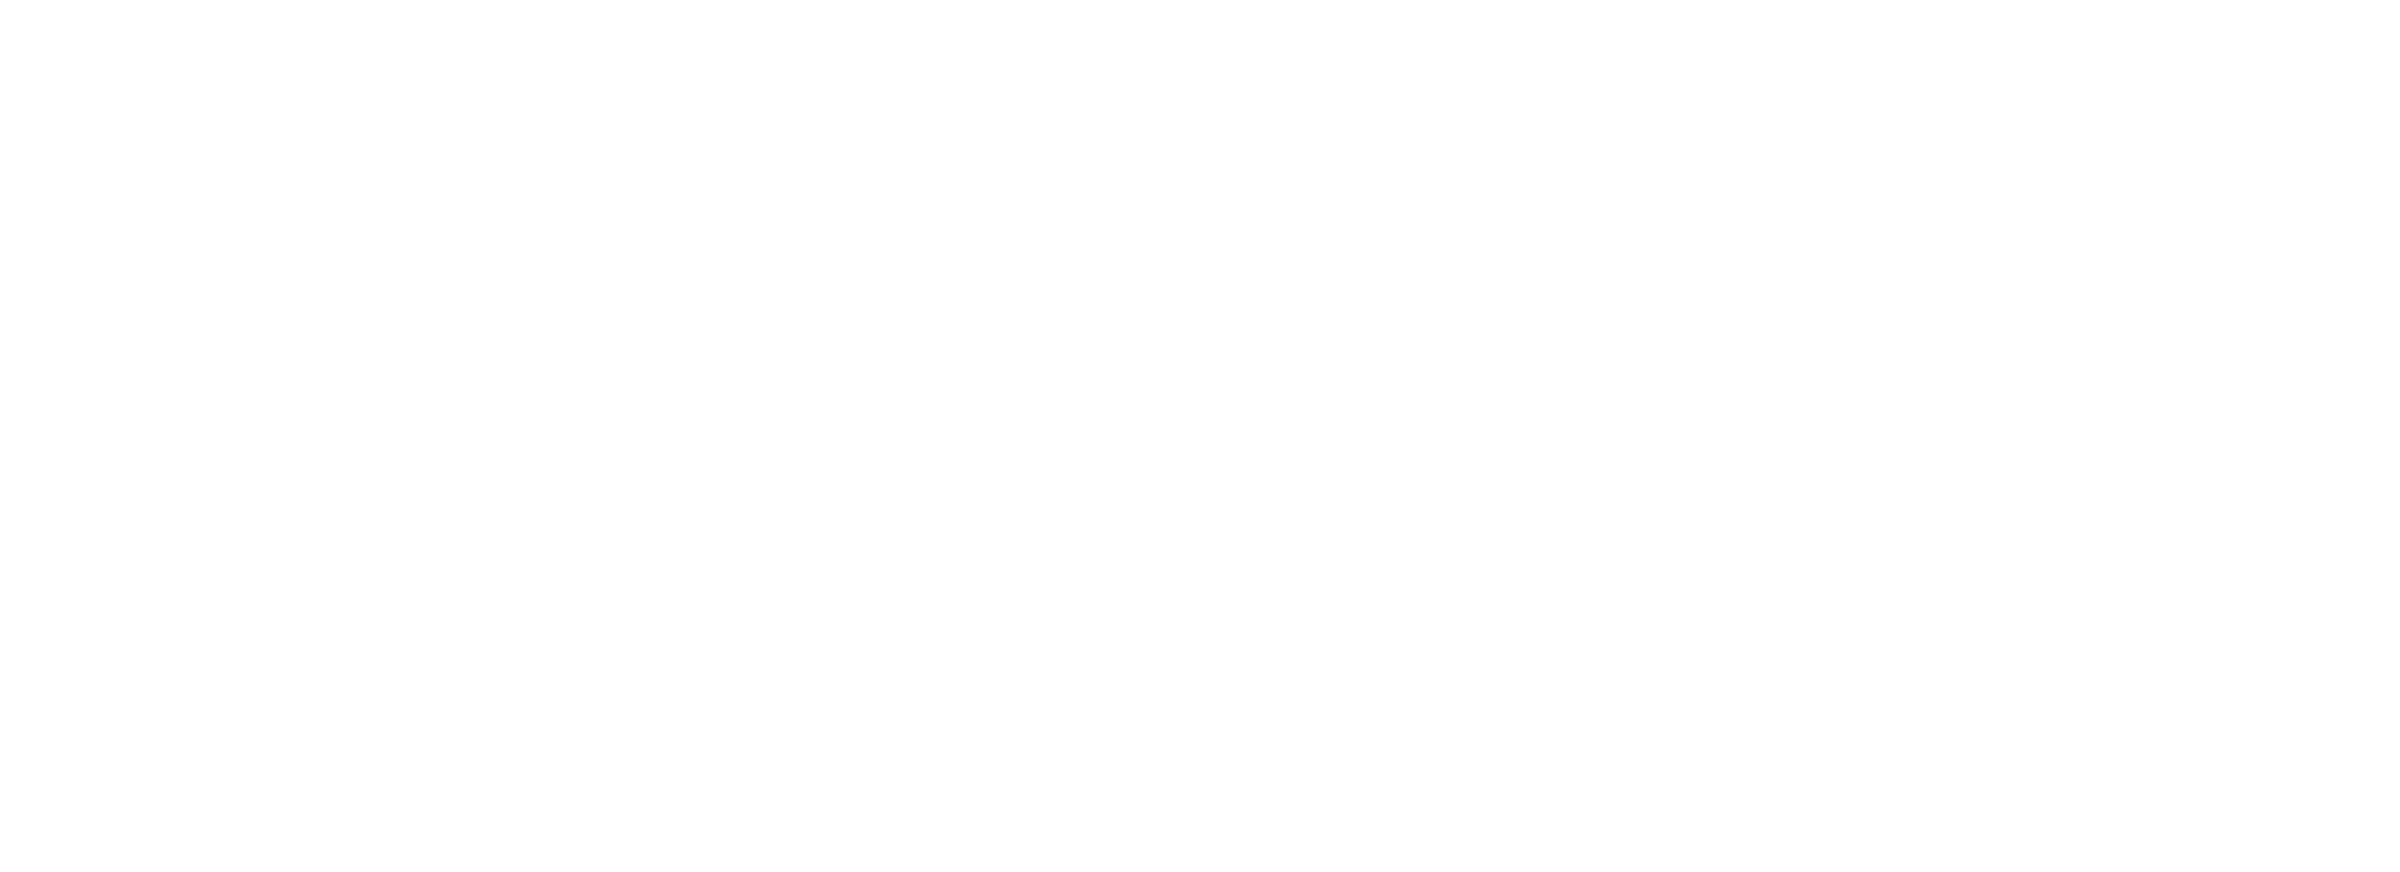 Introducing the 2022 SUCCESS Emerging Entrepreneurs Award Finalists